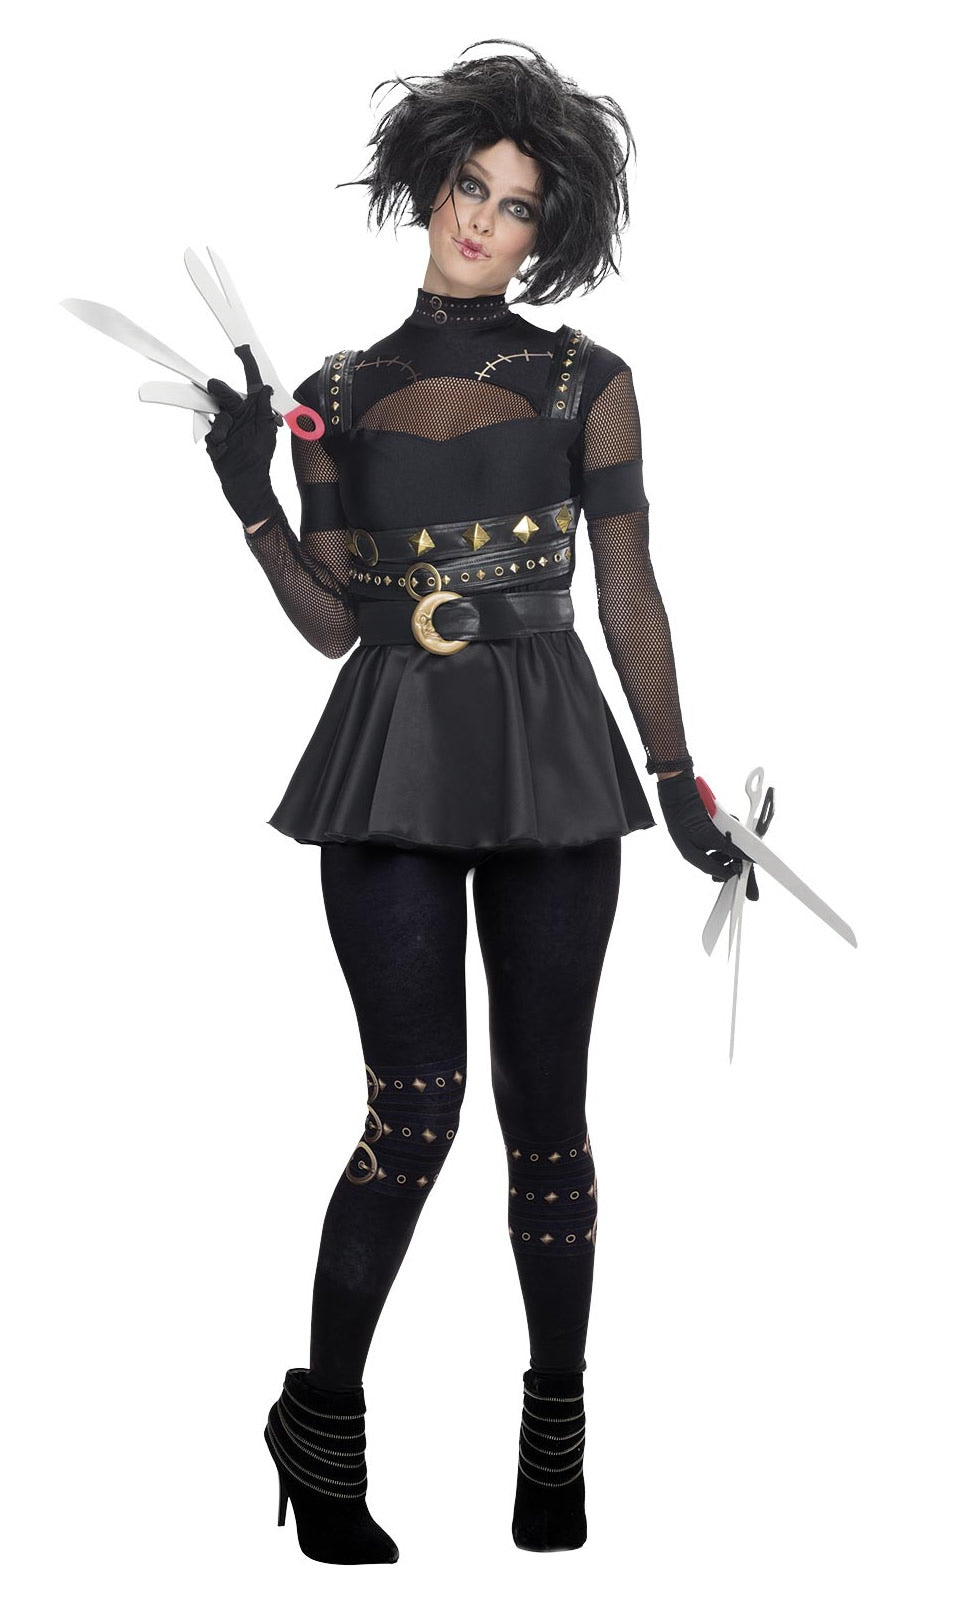 Miss Scissorhands dress with printed leggings, scissor hands and black wig